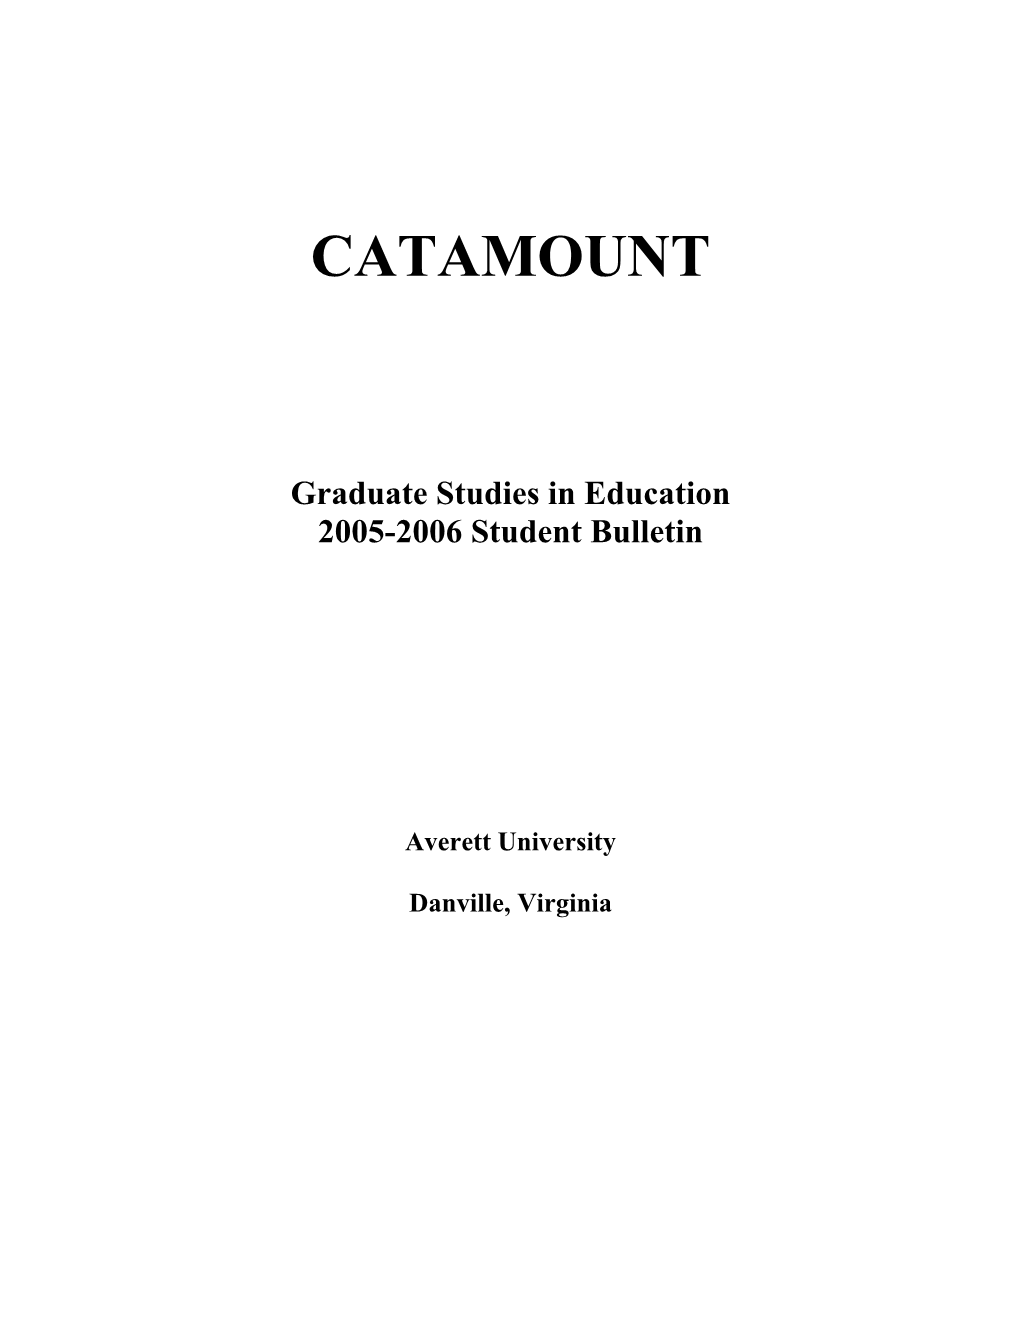 Graduate Studies in Education 2005-2006 Student Bulletin